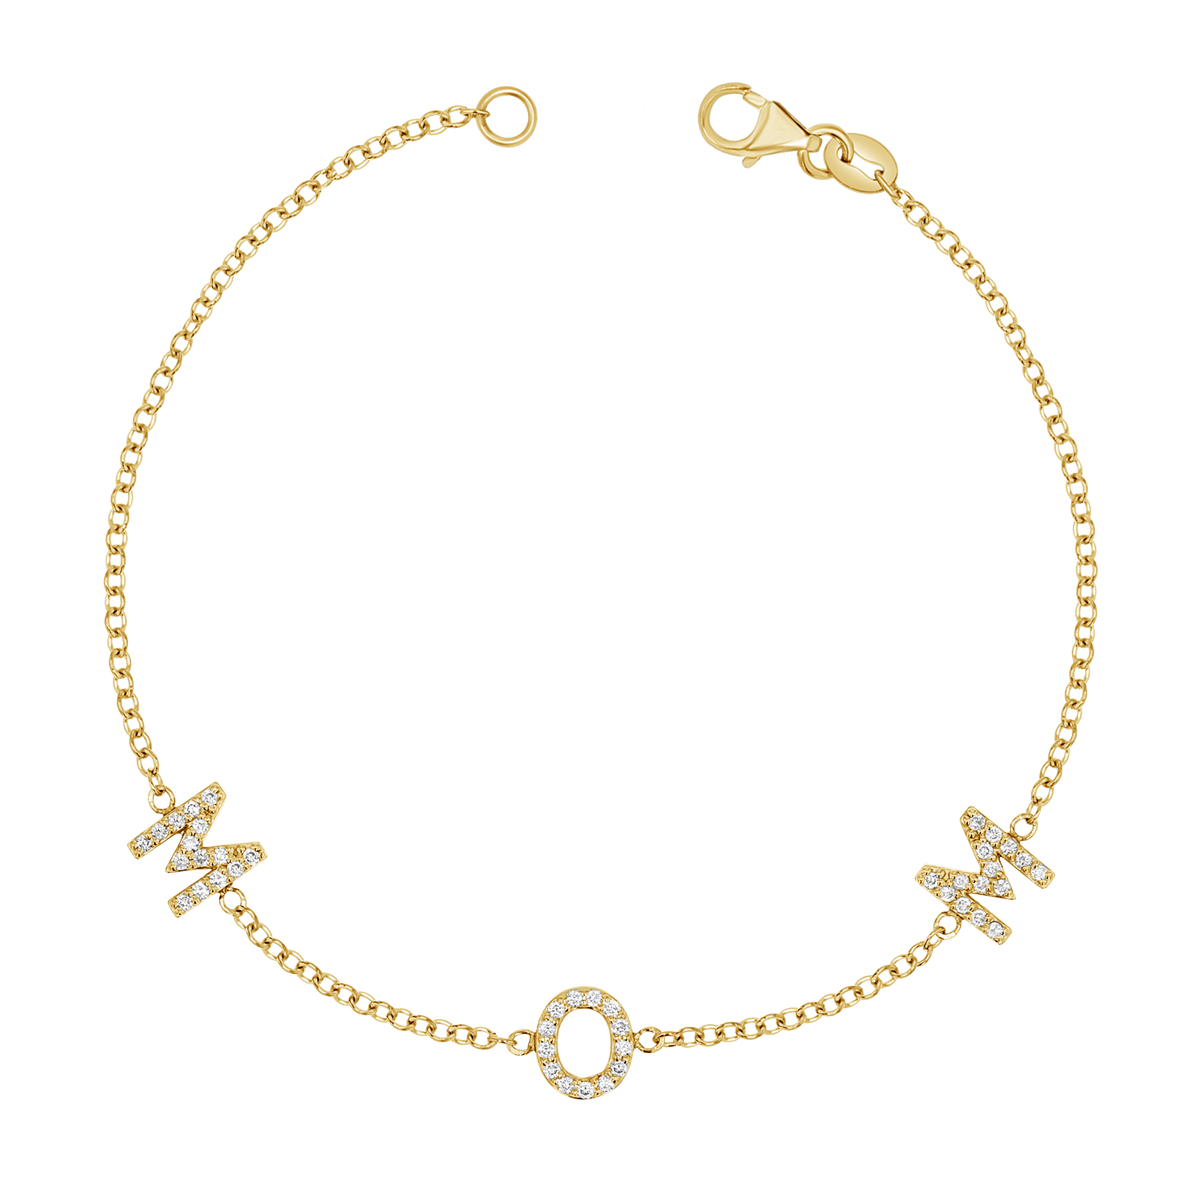 Initial Bracelet - Engraved Compass Bracelet - 14K Solid Gold - Gift for Anniversary - Gift for Mom